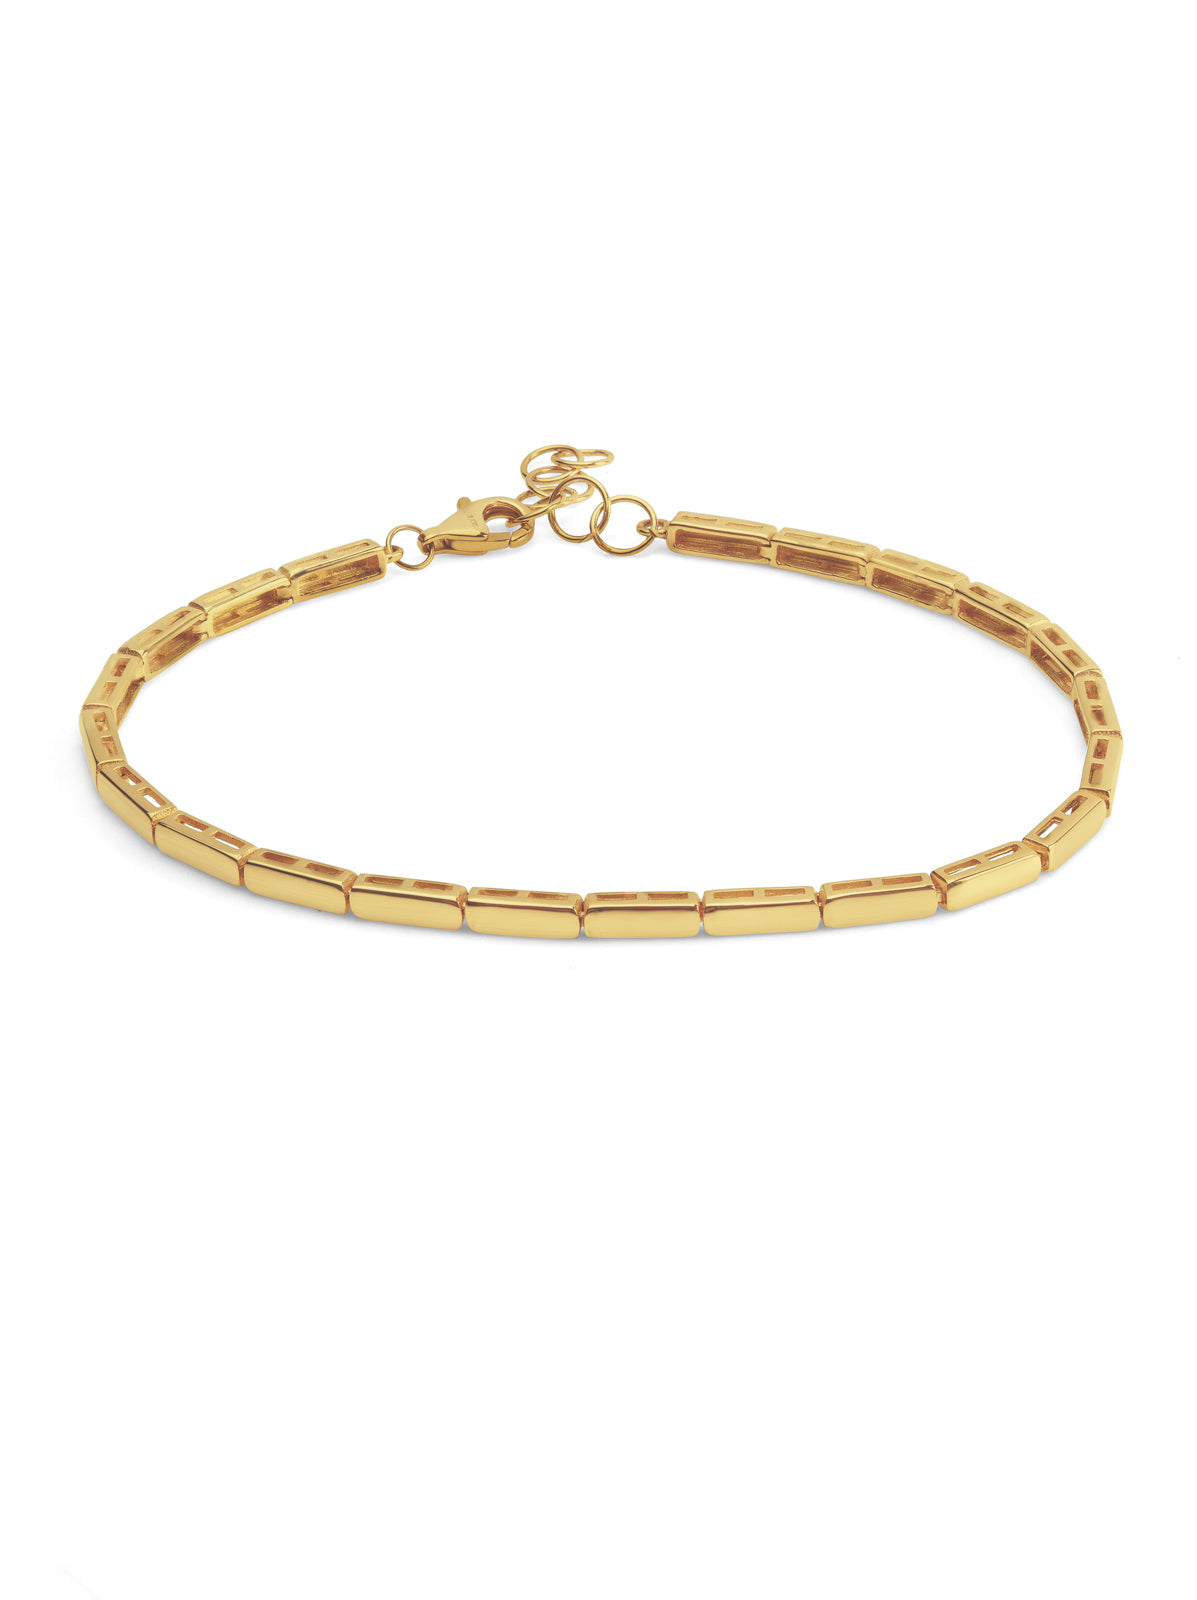 Julez Bryant 14k Gold Diamond Bar Bracelet